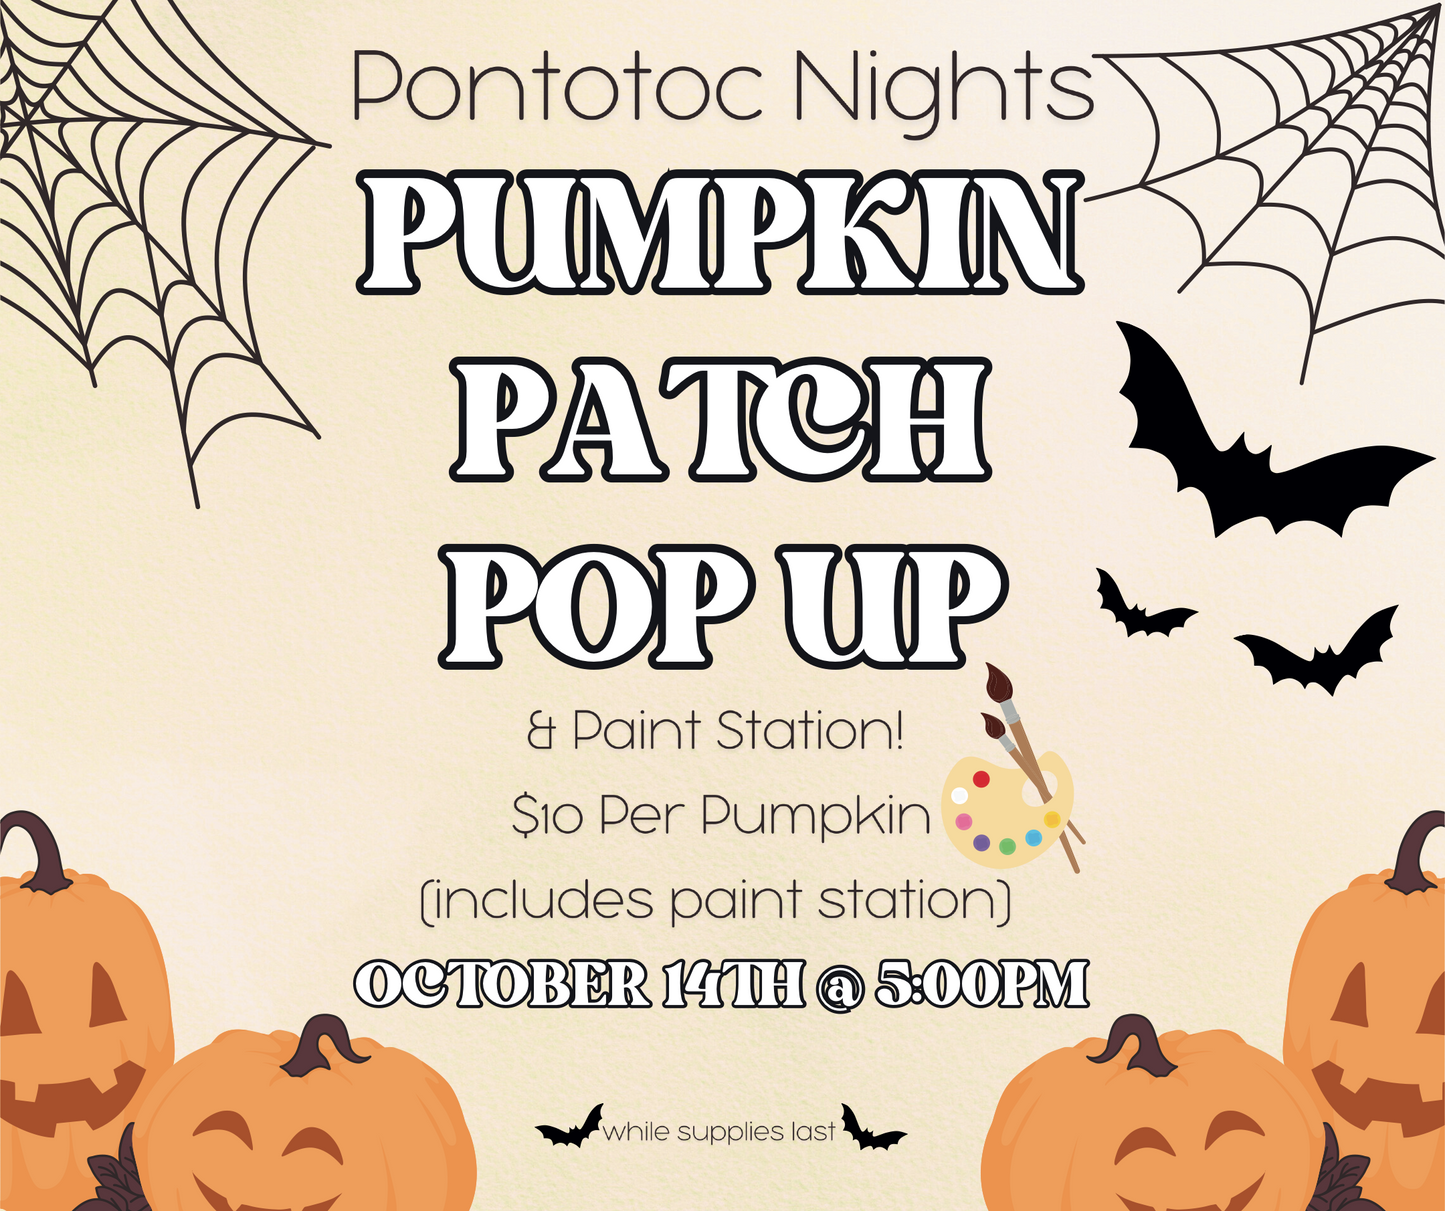 Pontotoc Nights Pumpkin Patch Pre-Pay